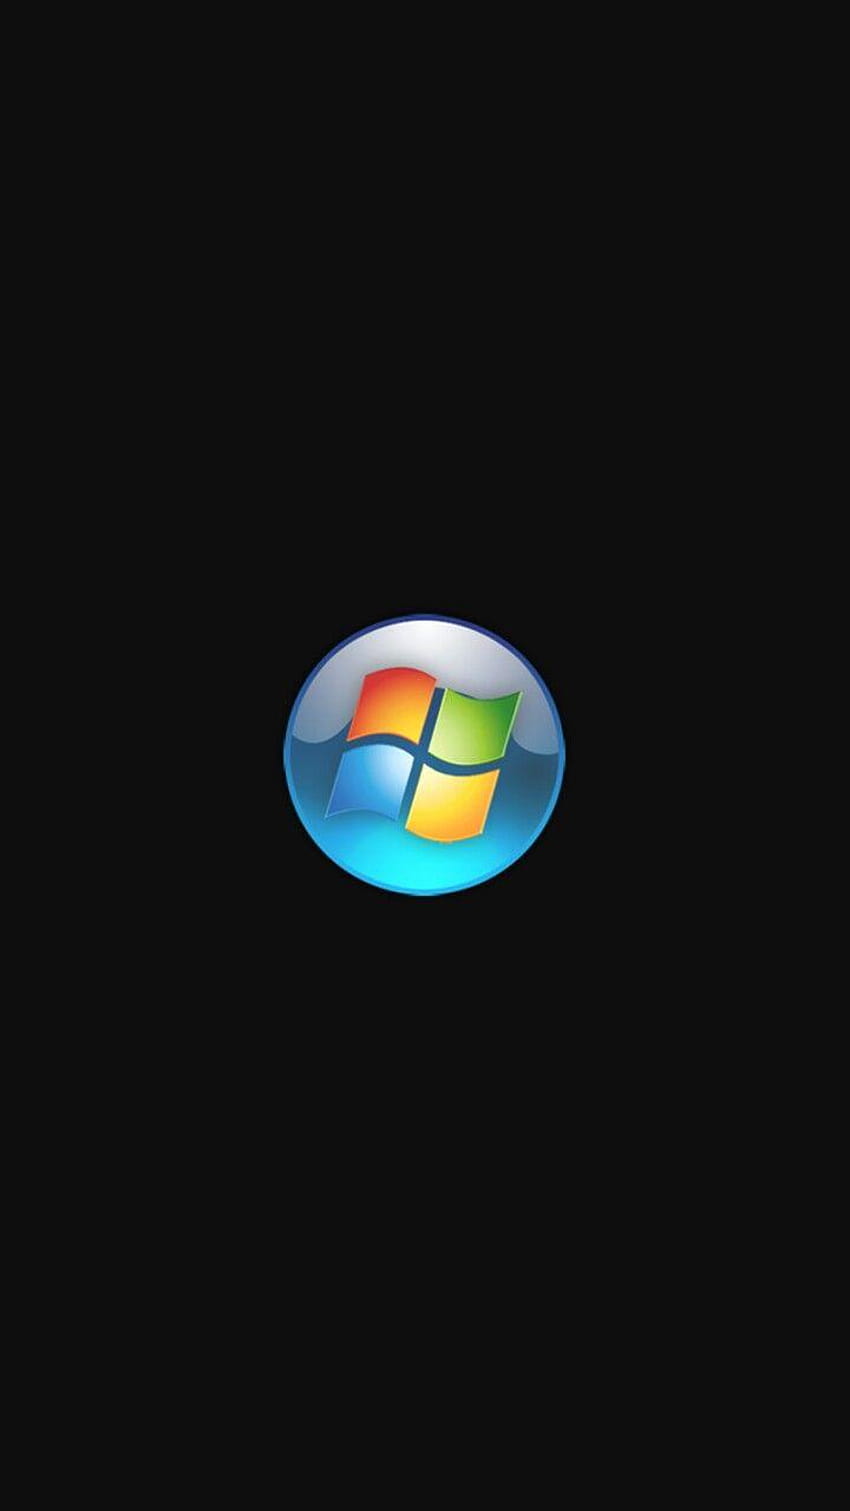 Logotipo do Windows iphone, vista preto brilhante Papel de parede de celular HD